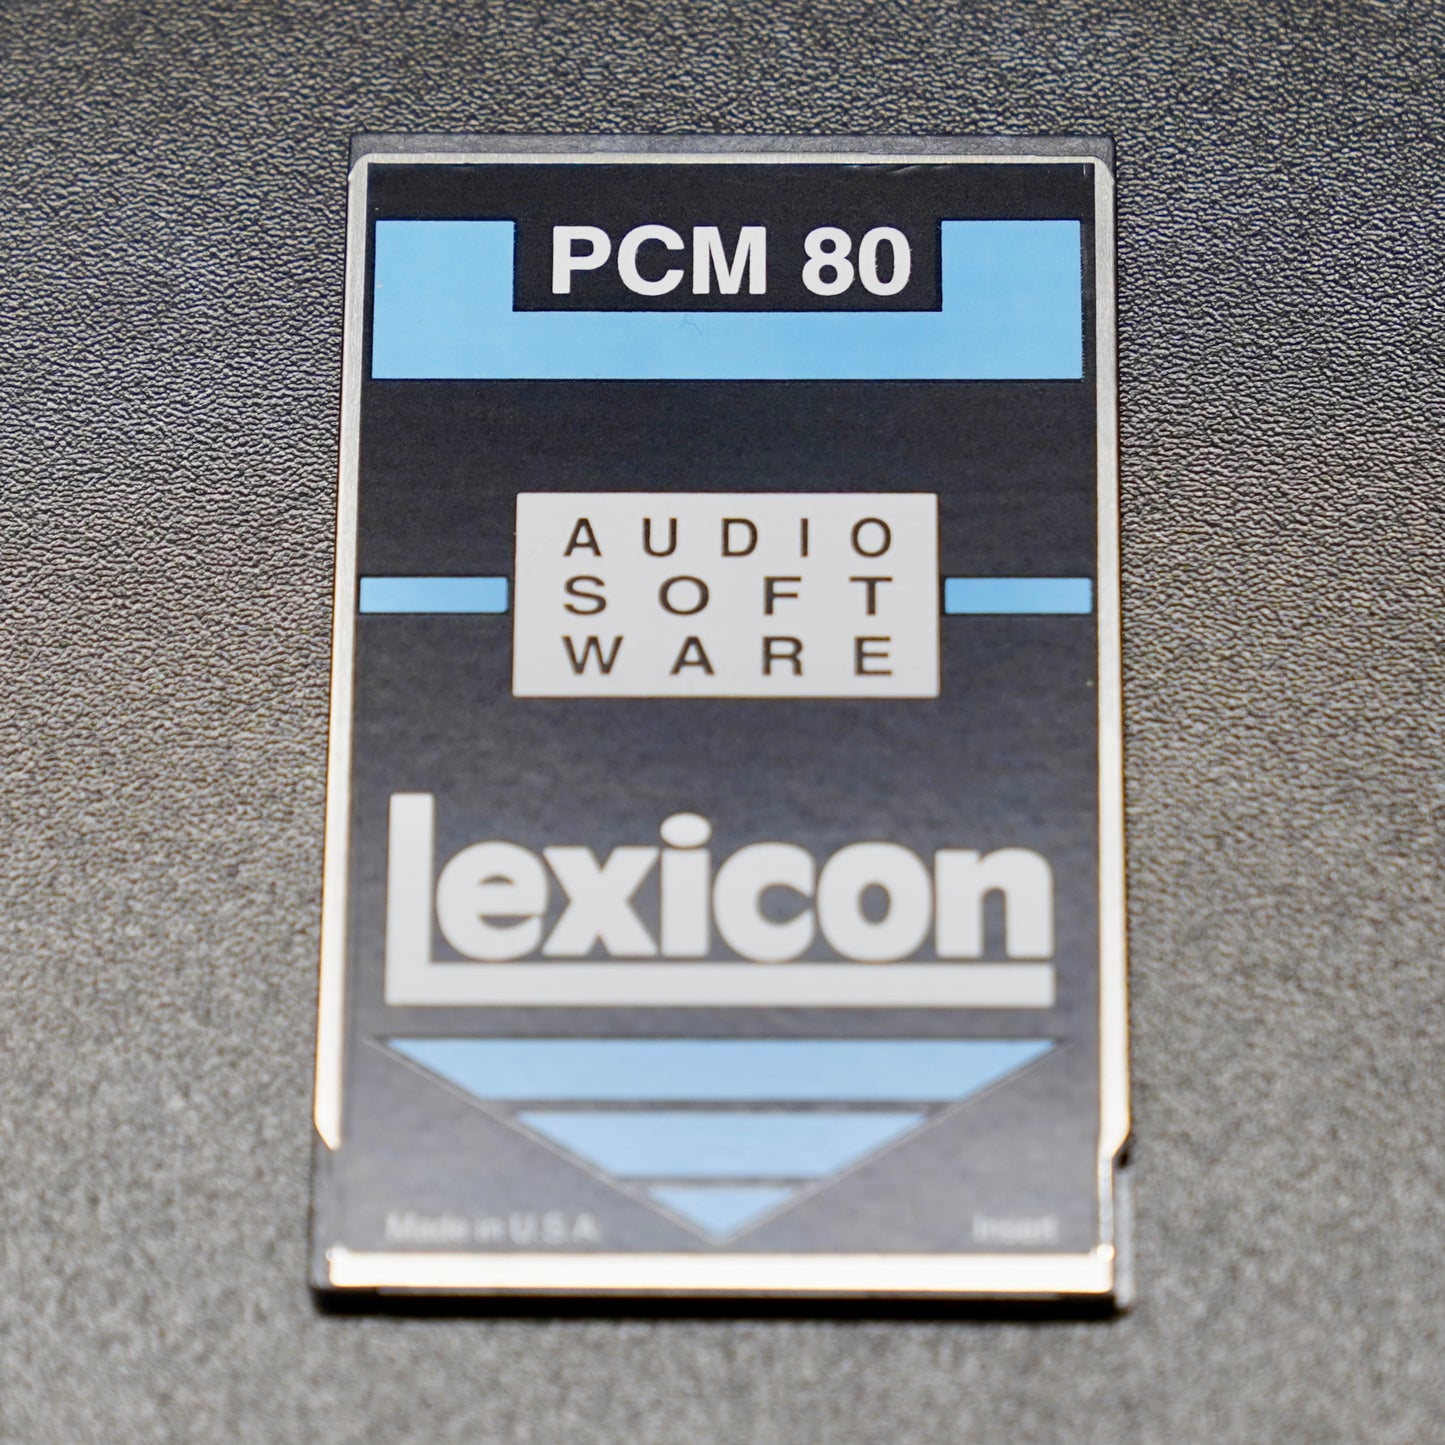 Lexicon PCM80 Dual FX V1.0 Algorithm Card